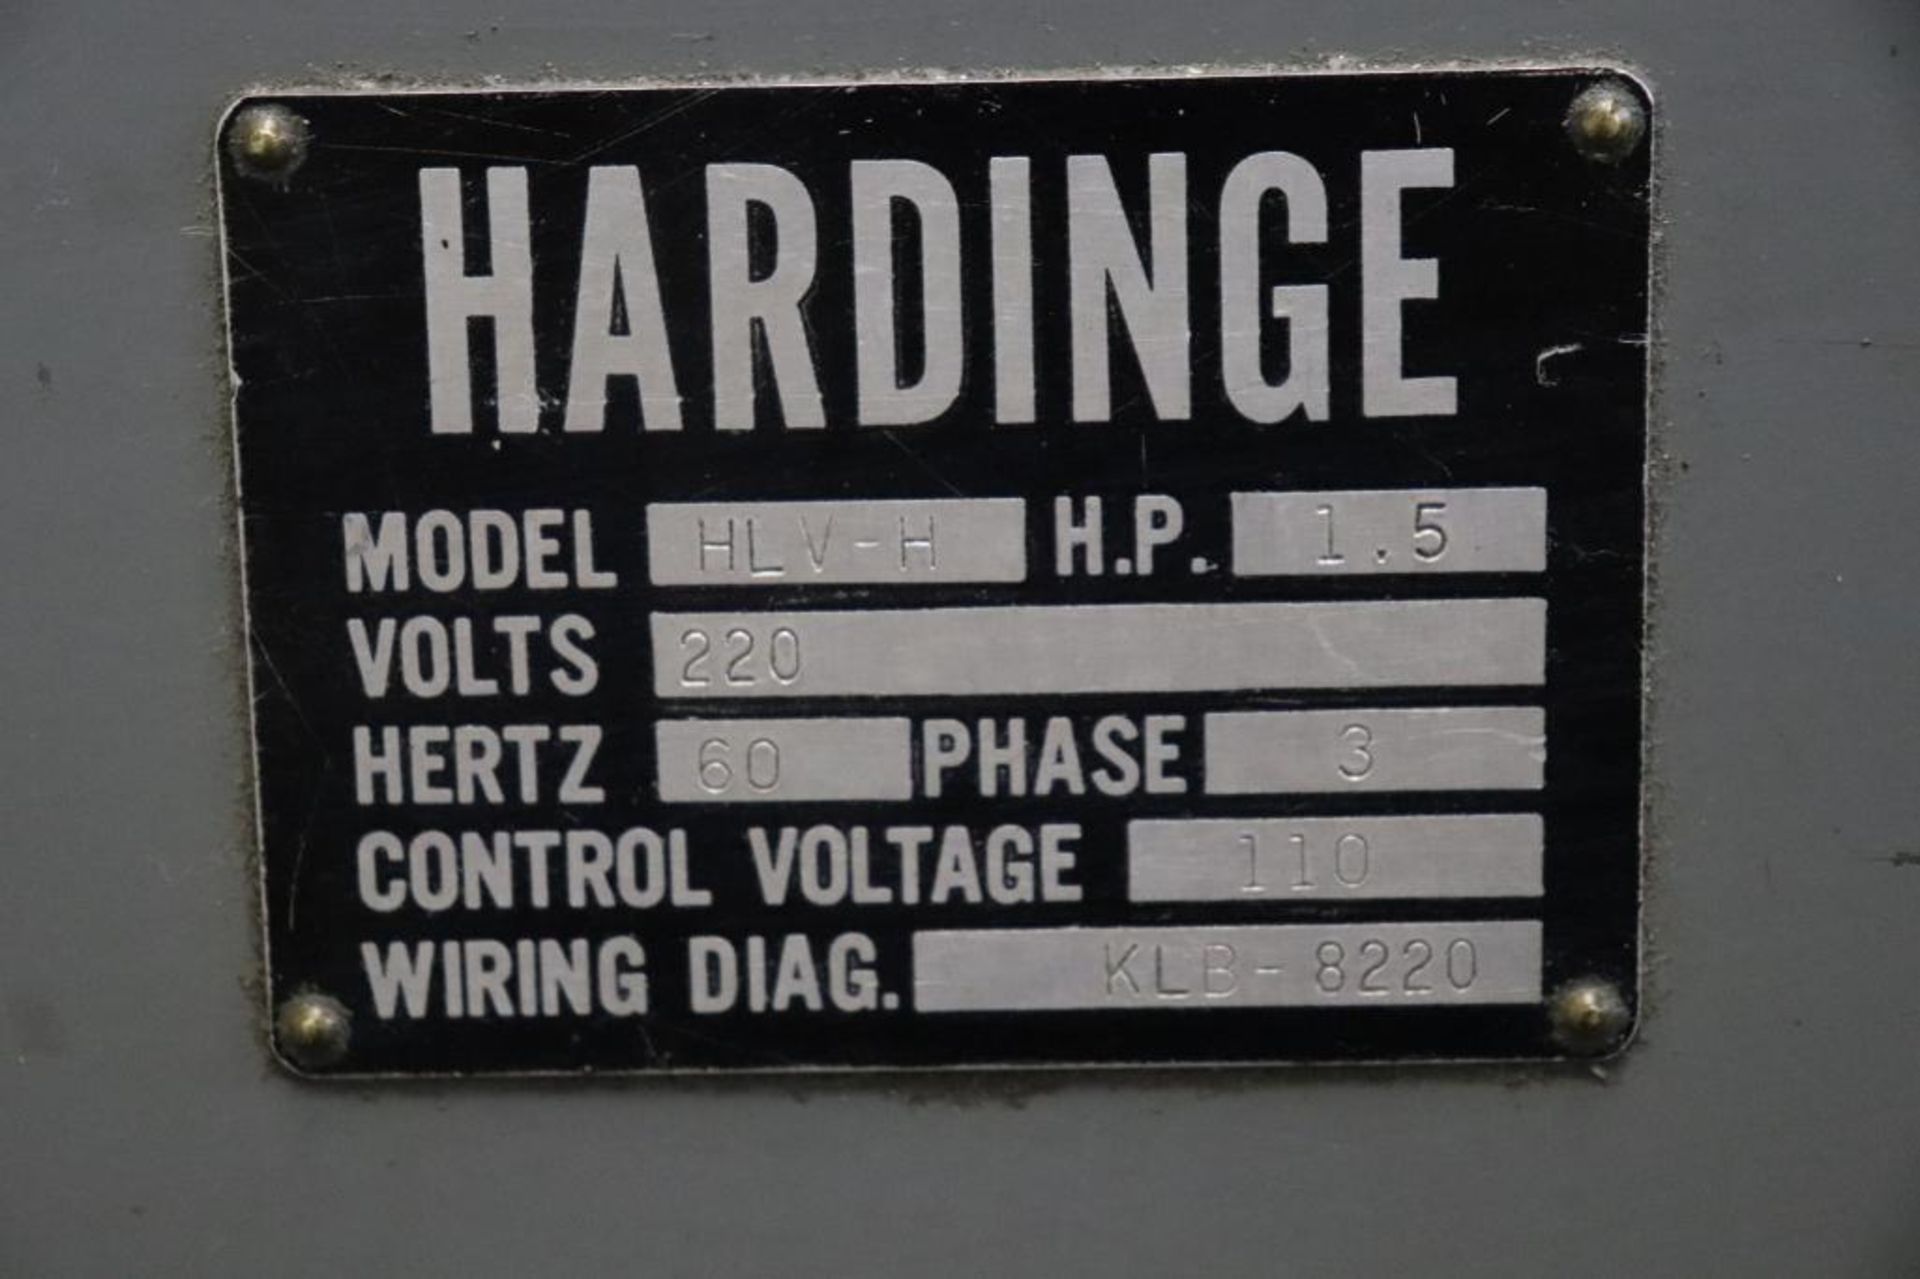 Hardinge HLV-H precision tool room lathe - Image 19 of 26